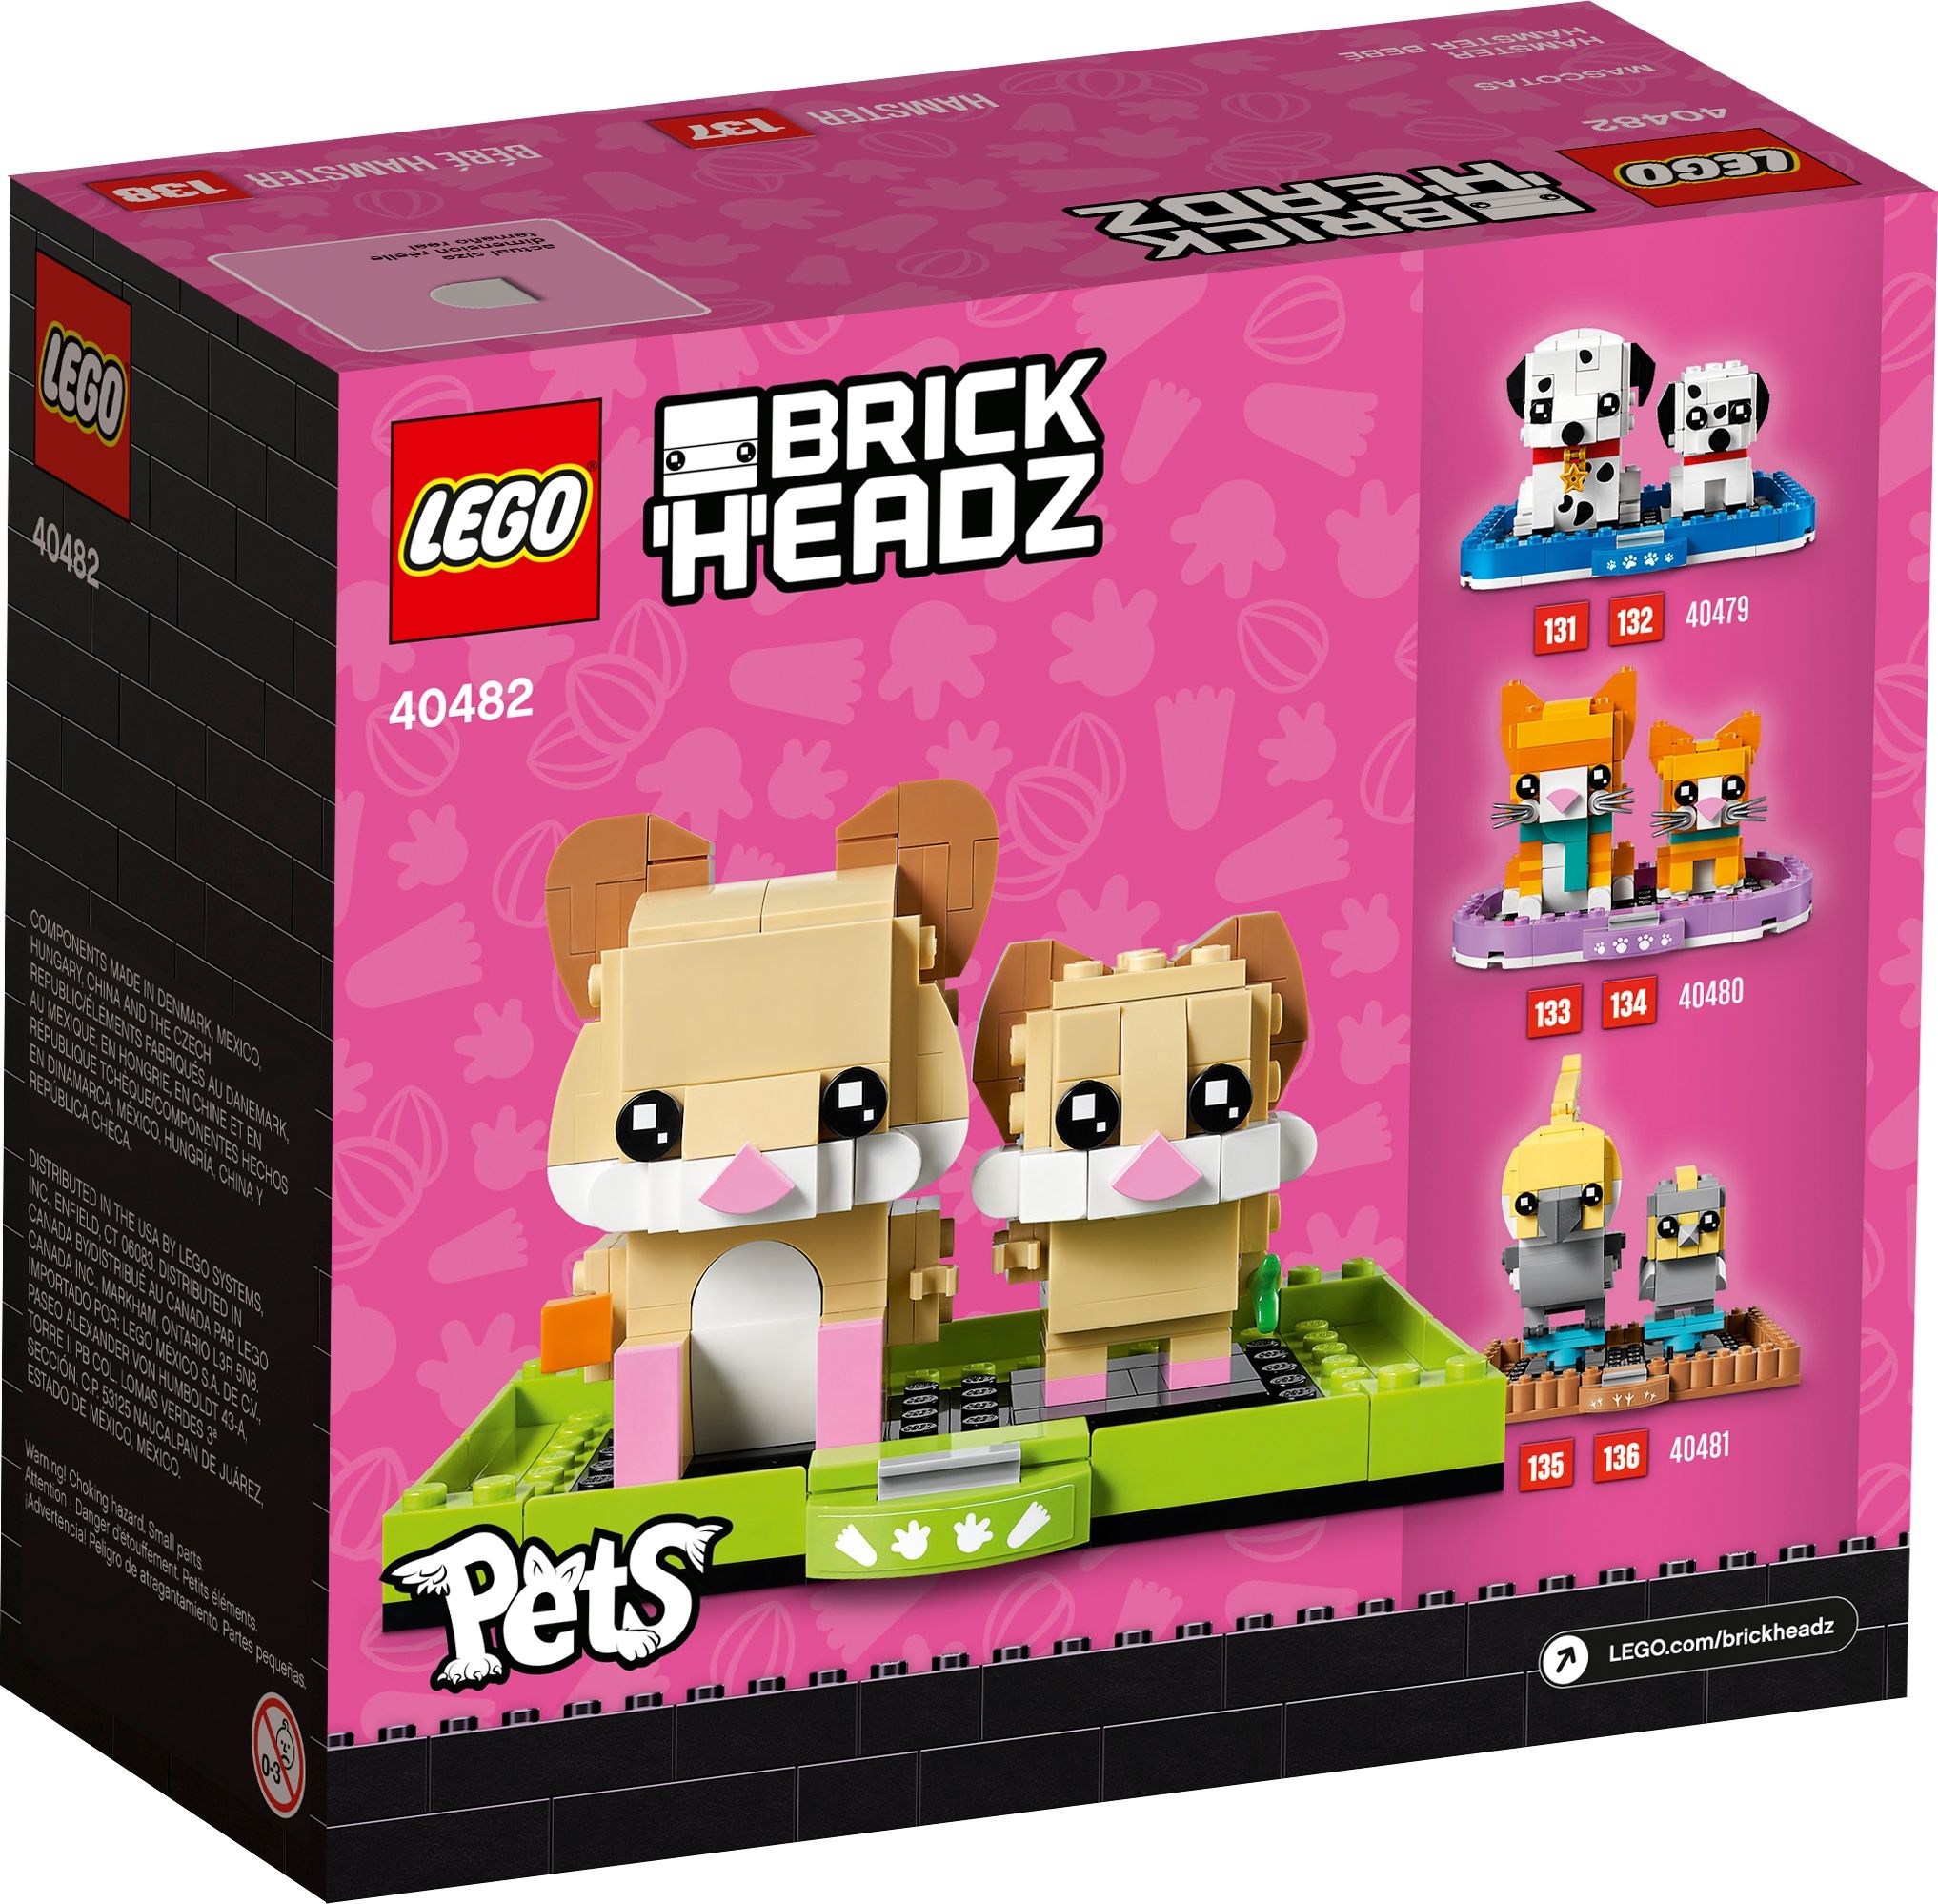 LEGO BrickHeadz 40482 Hamster LEGO_40482_alt2.jpg